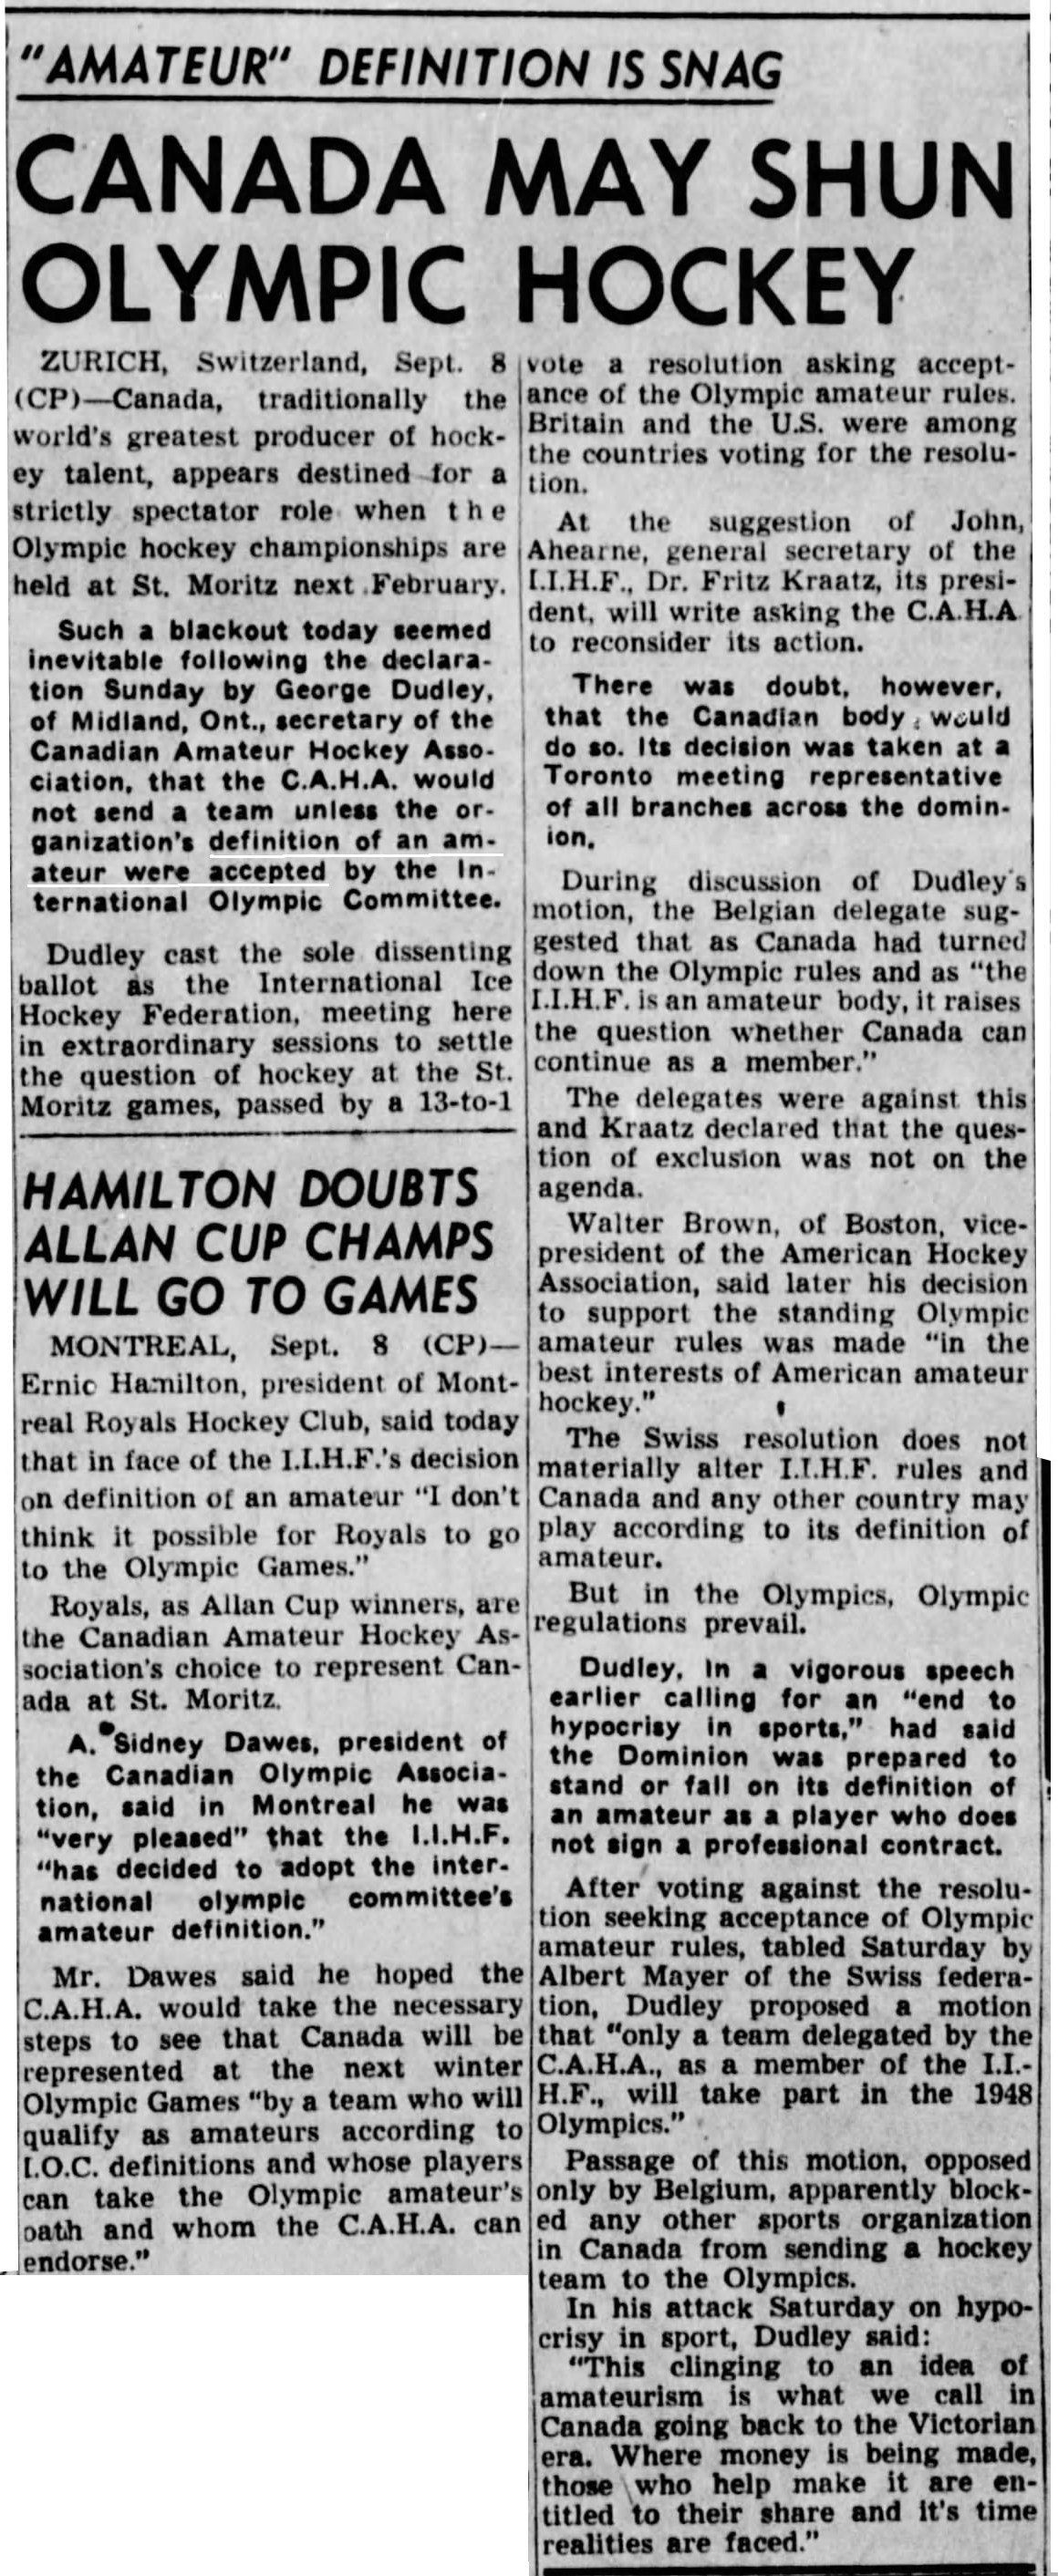 Image: Winnipeg Tribune Sept 8 1947 Canada May Shun Olympic Hockey